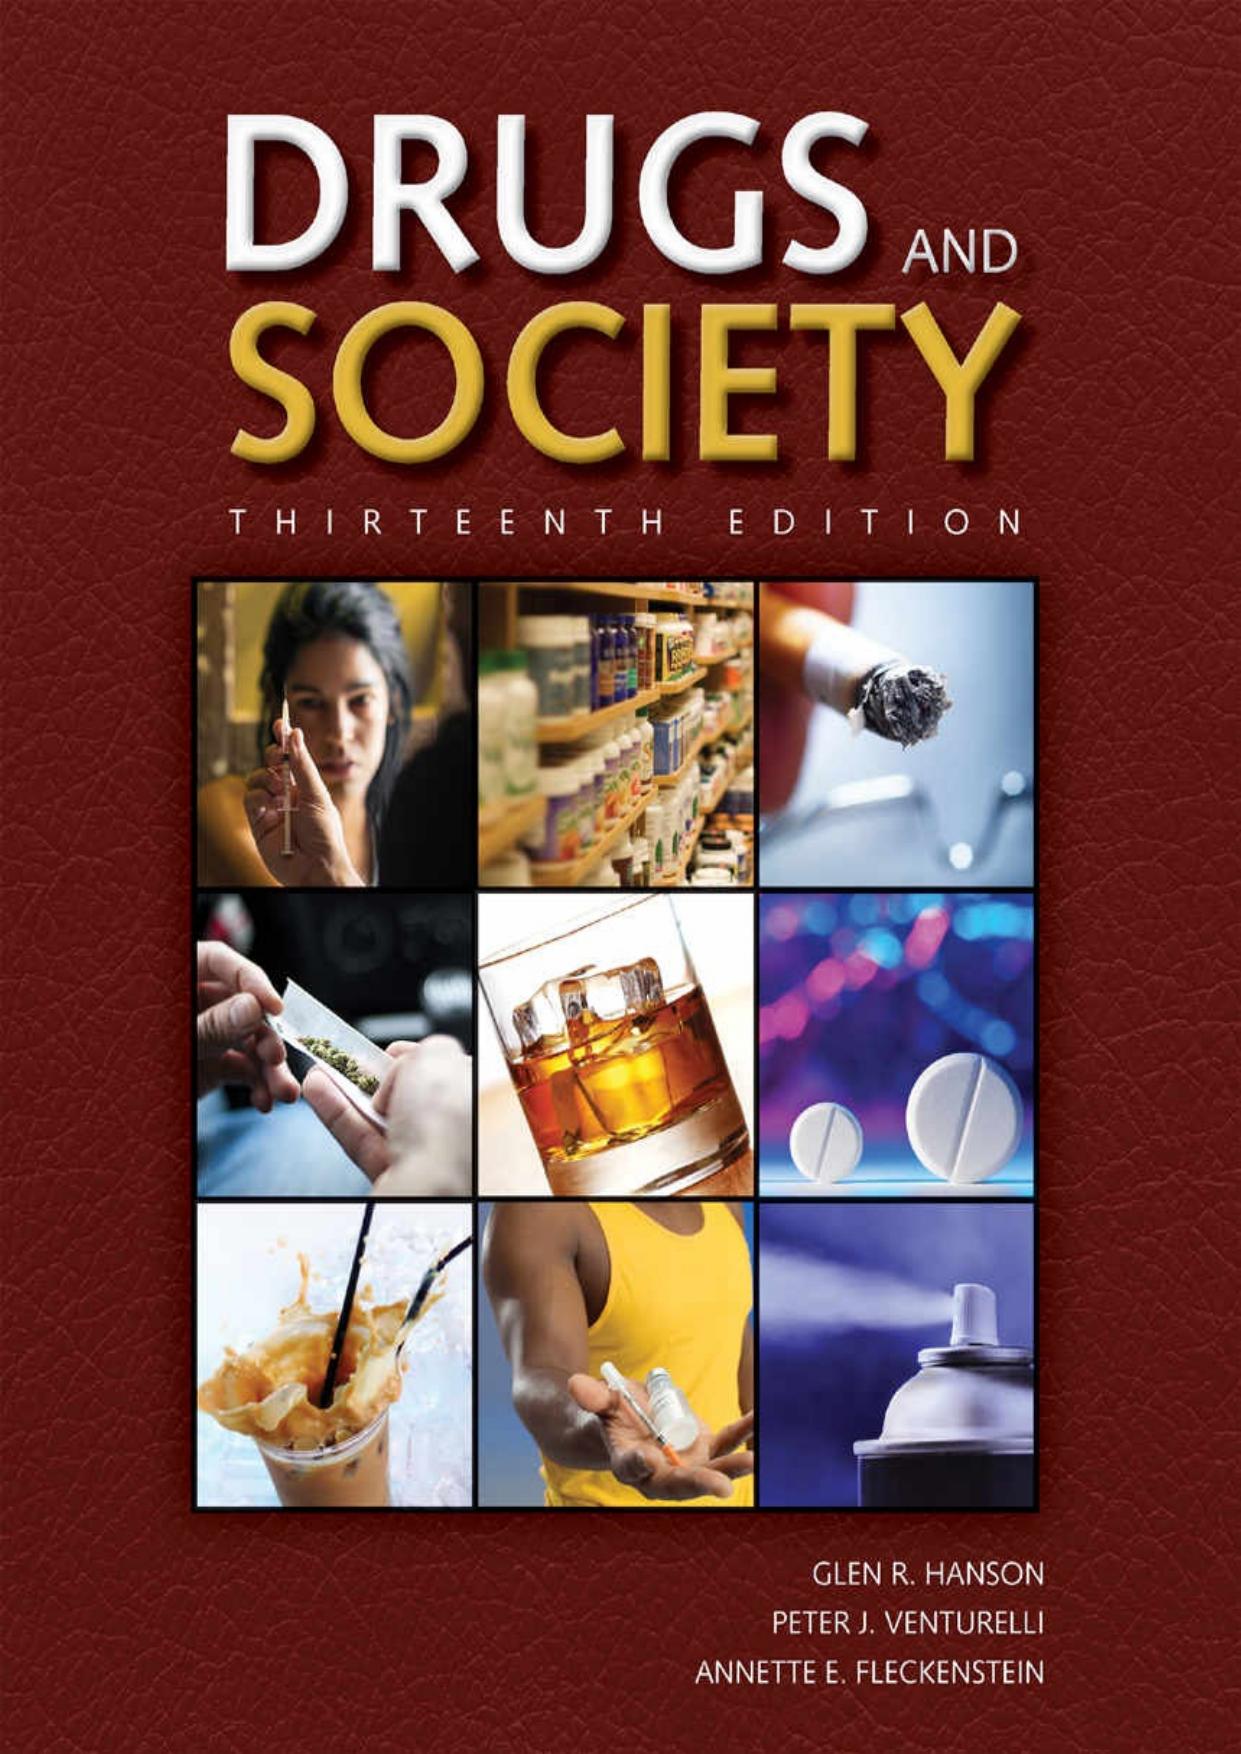 Drugs and Society 13th Edition by Glen R. Hanson.jpg